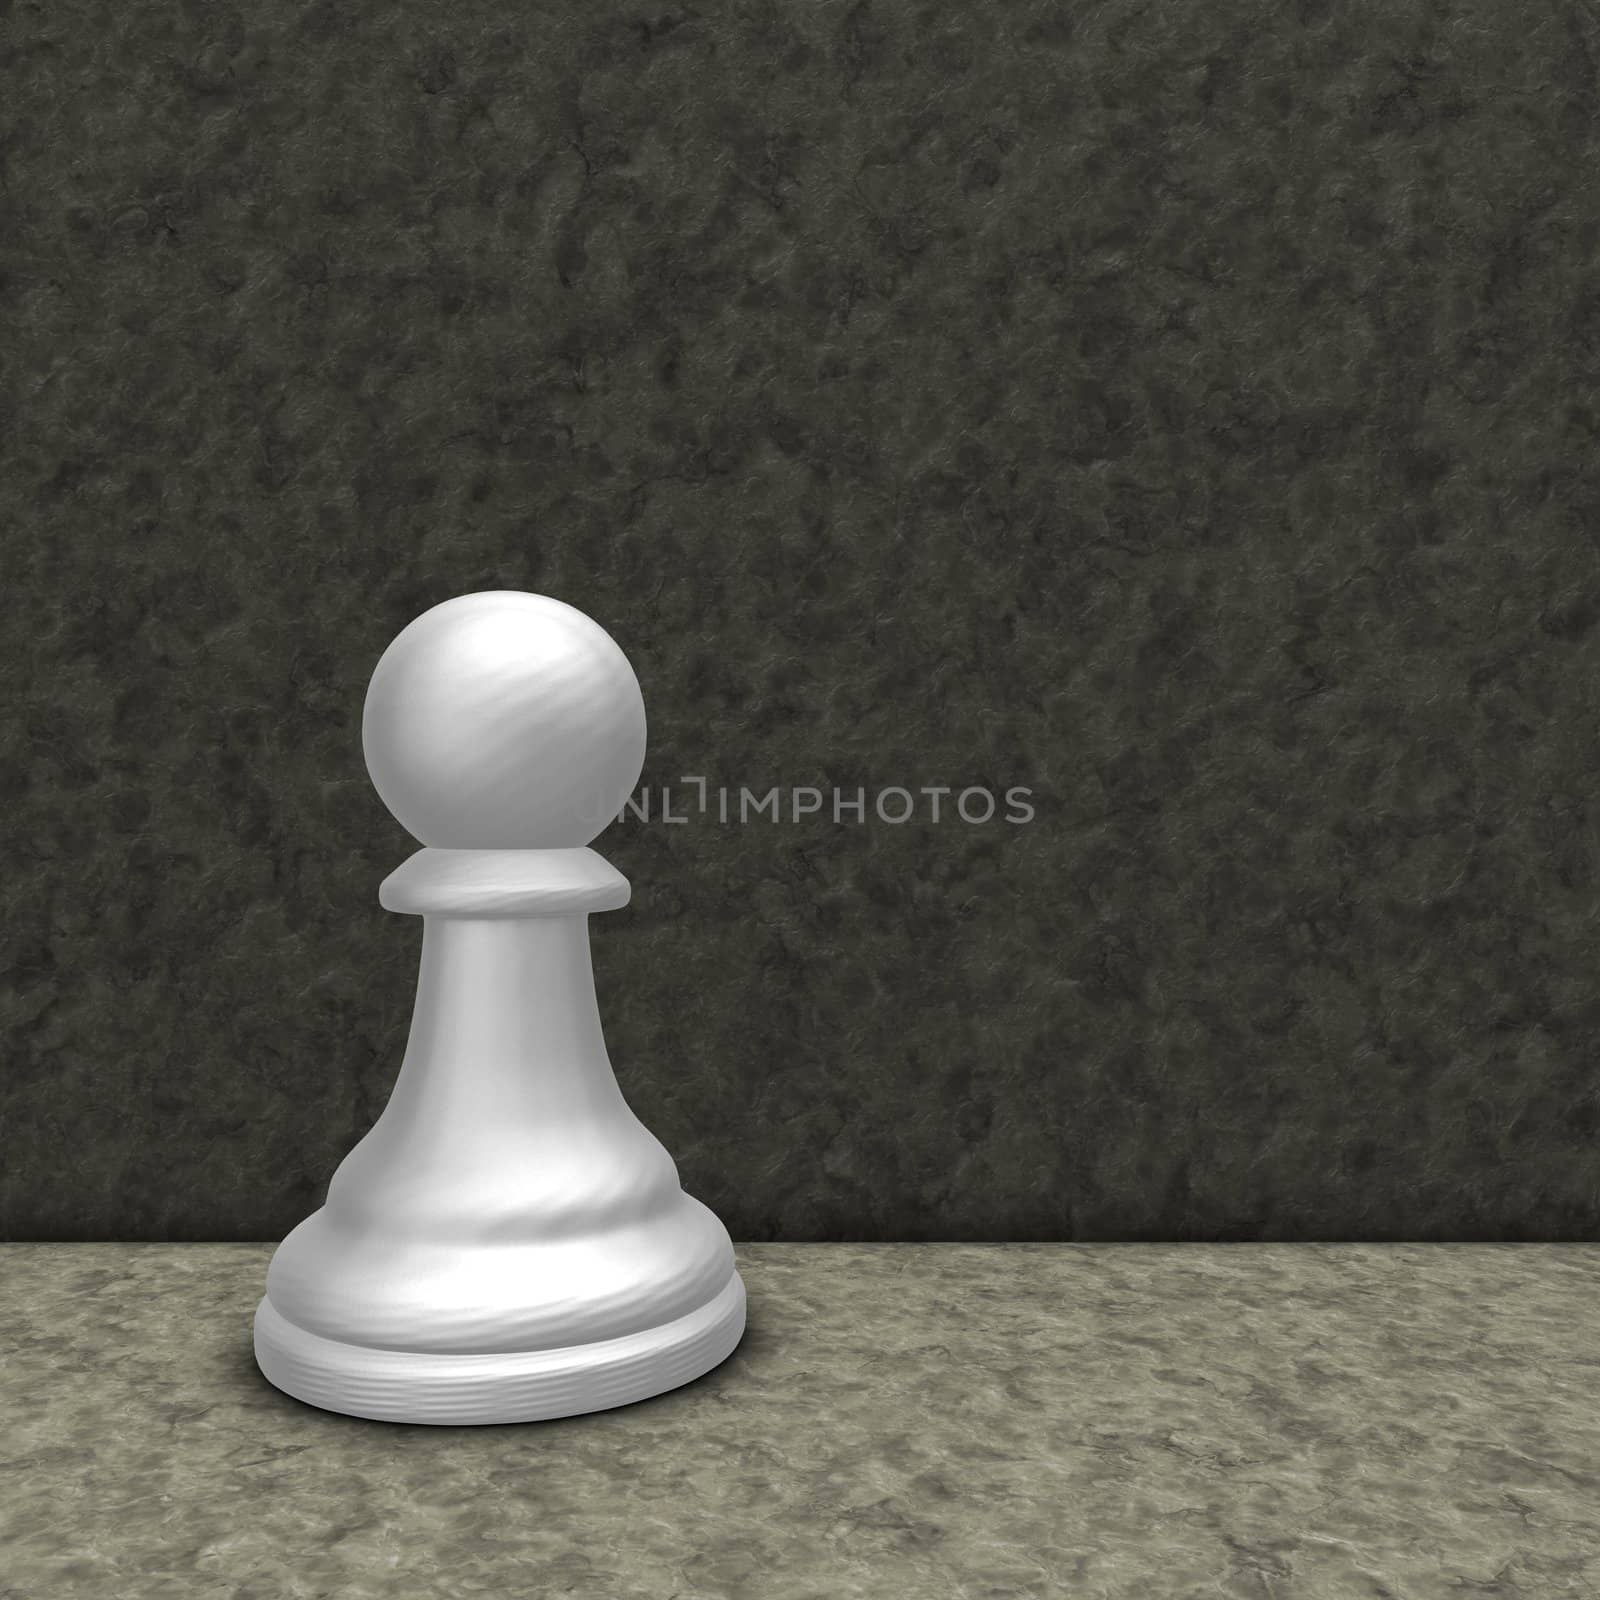 white chess pawn - 3d illustration